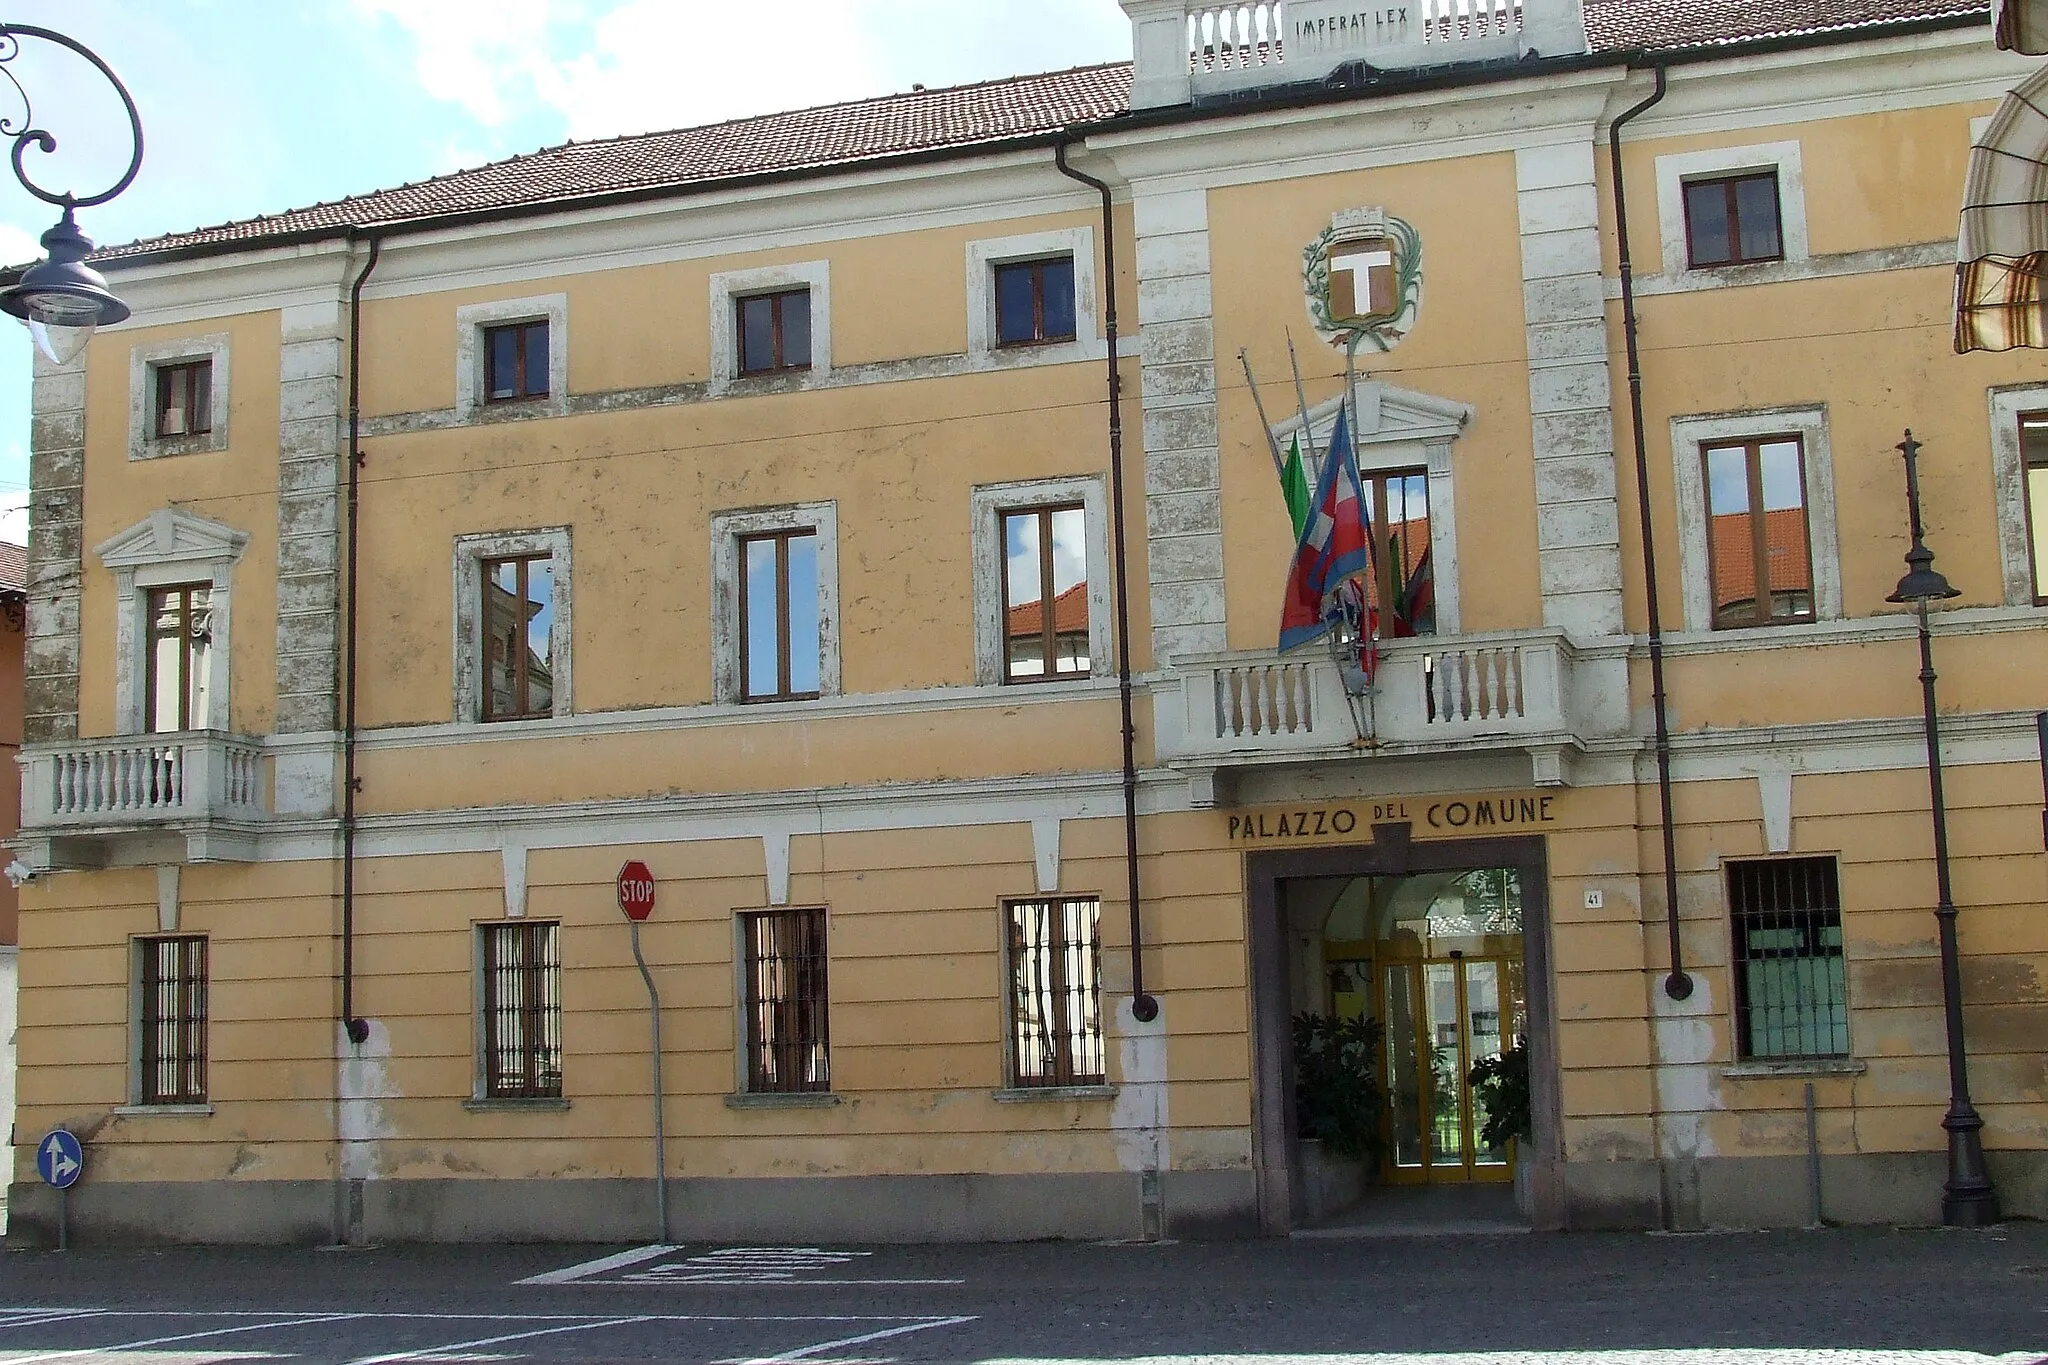 Image of Tronzano Vercellese